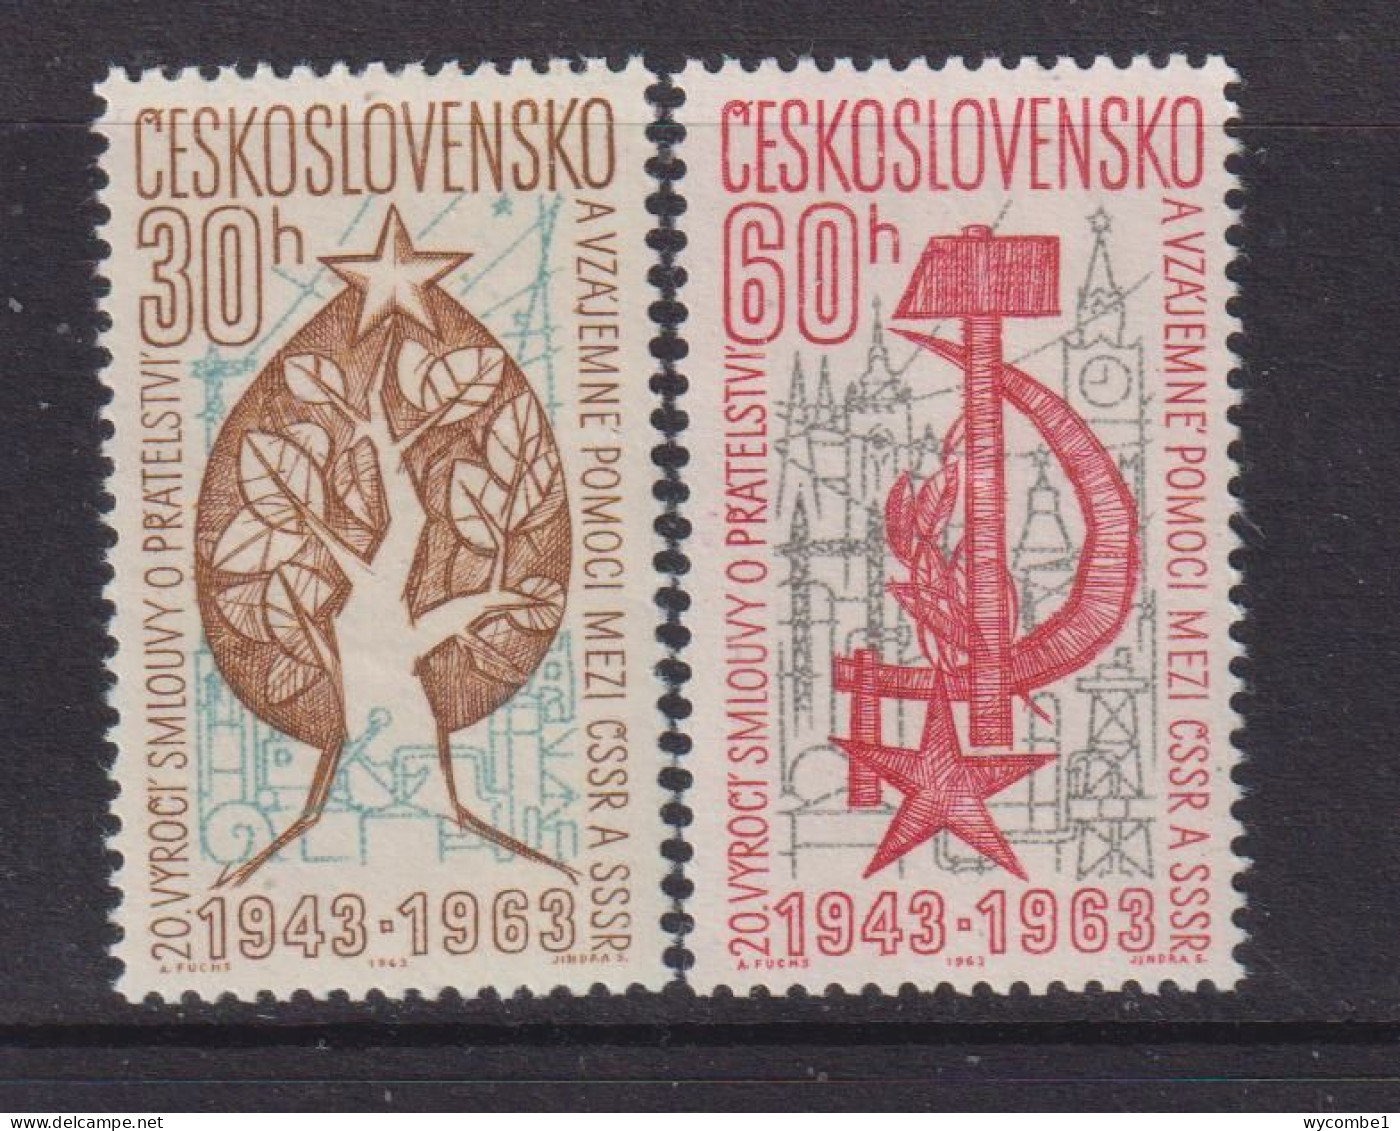 CZECHOSLOVAKIA  - 1963 Friendship Treaty Set Never Hinged Mint - Ungebraucht